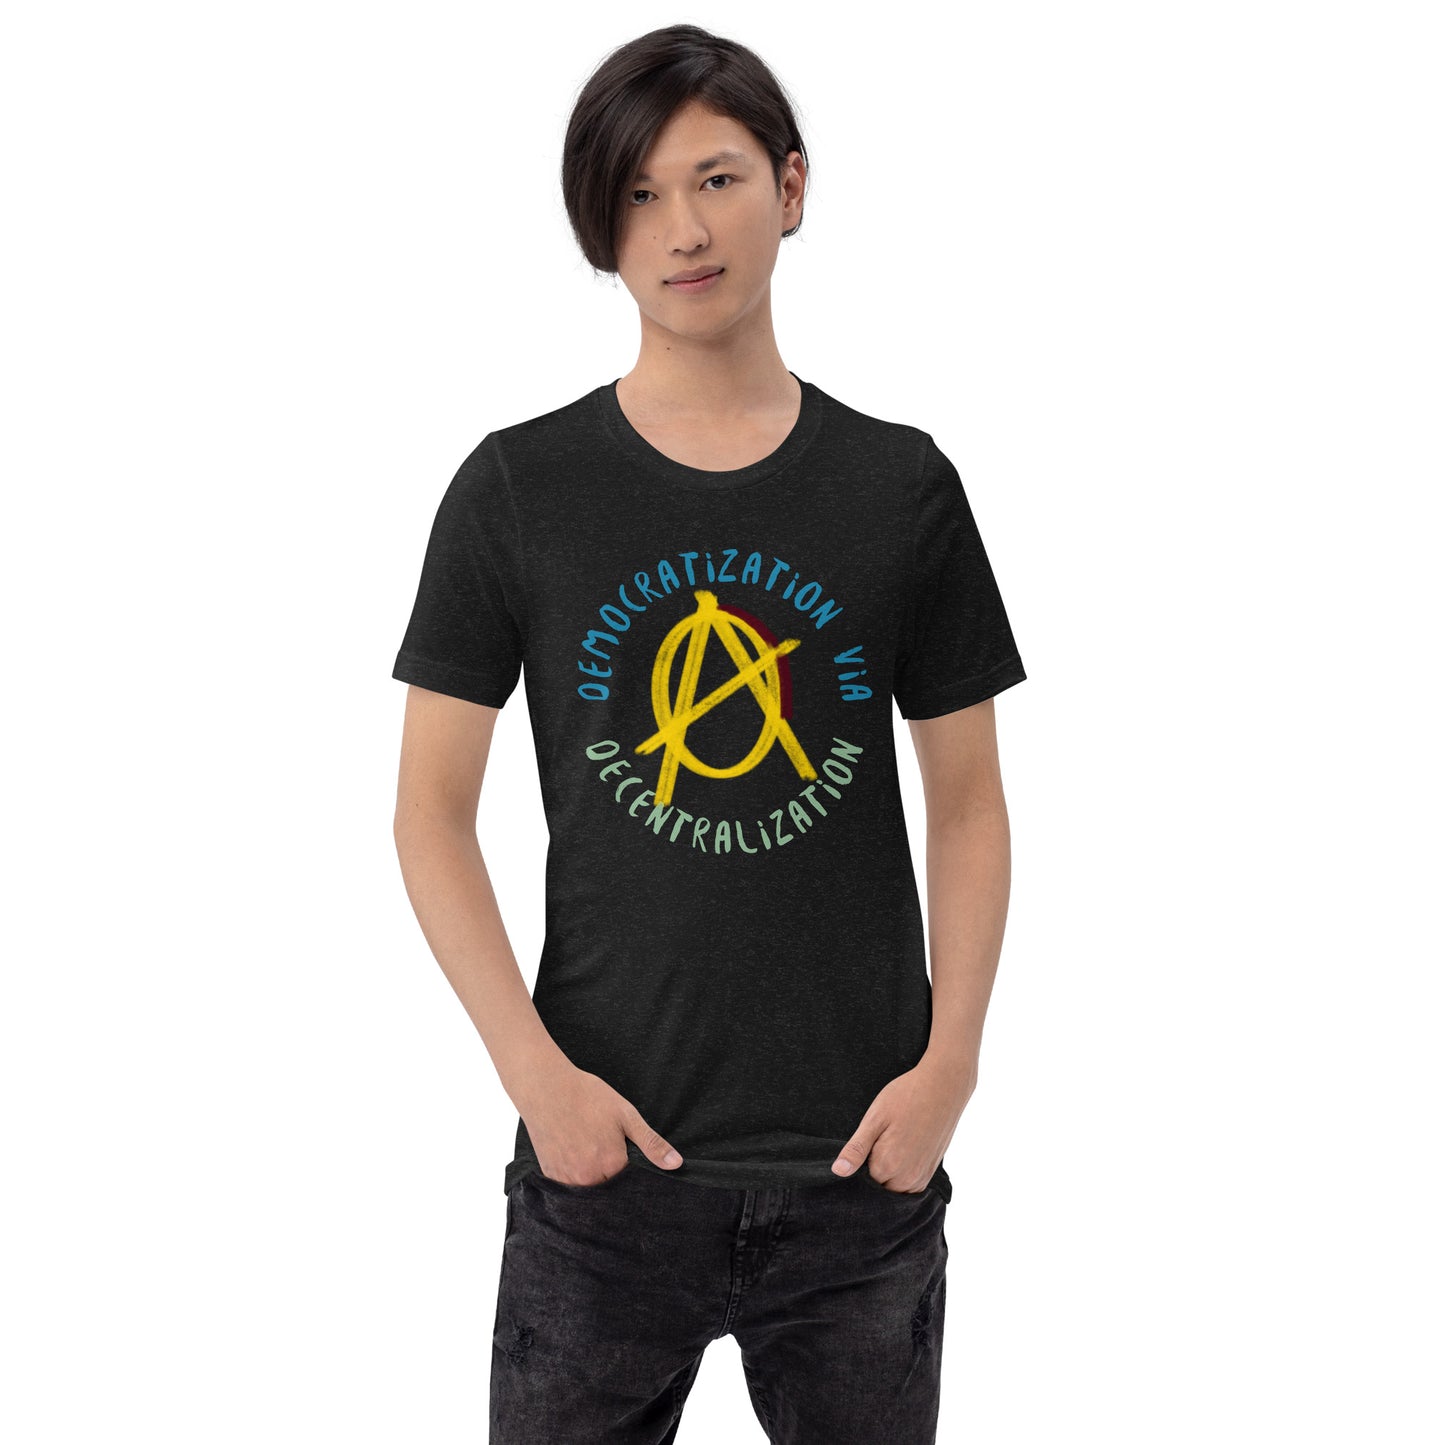 Anarchy Wear Gold "Democratization Via Decentralization" Unisex t-shirt